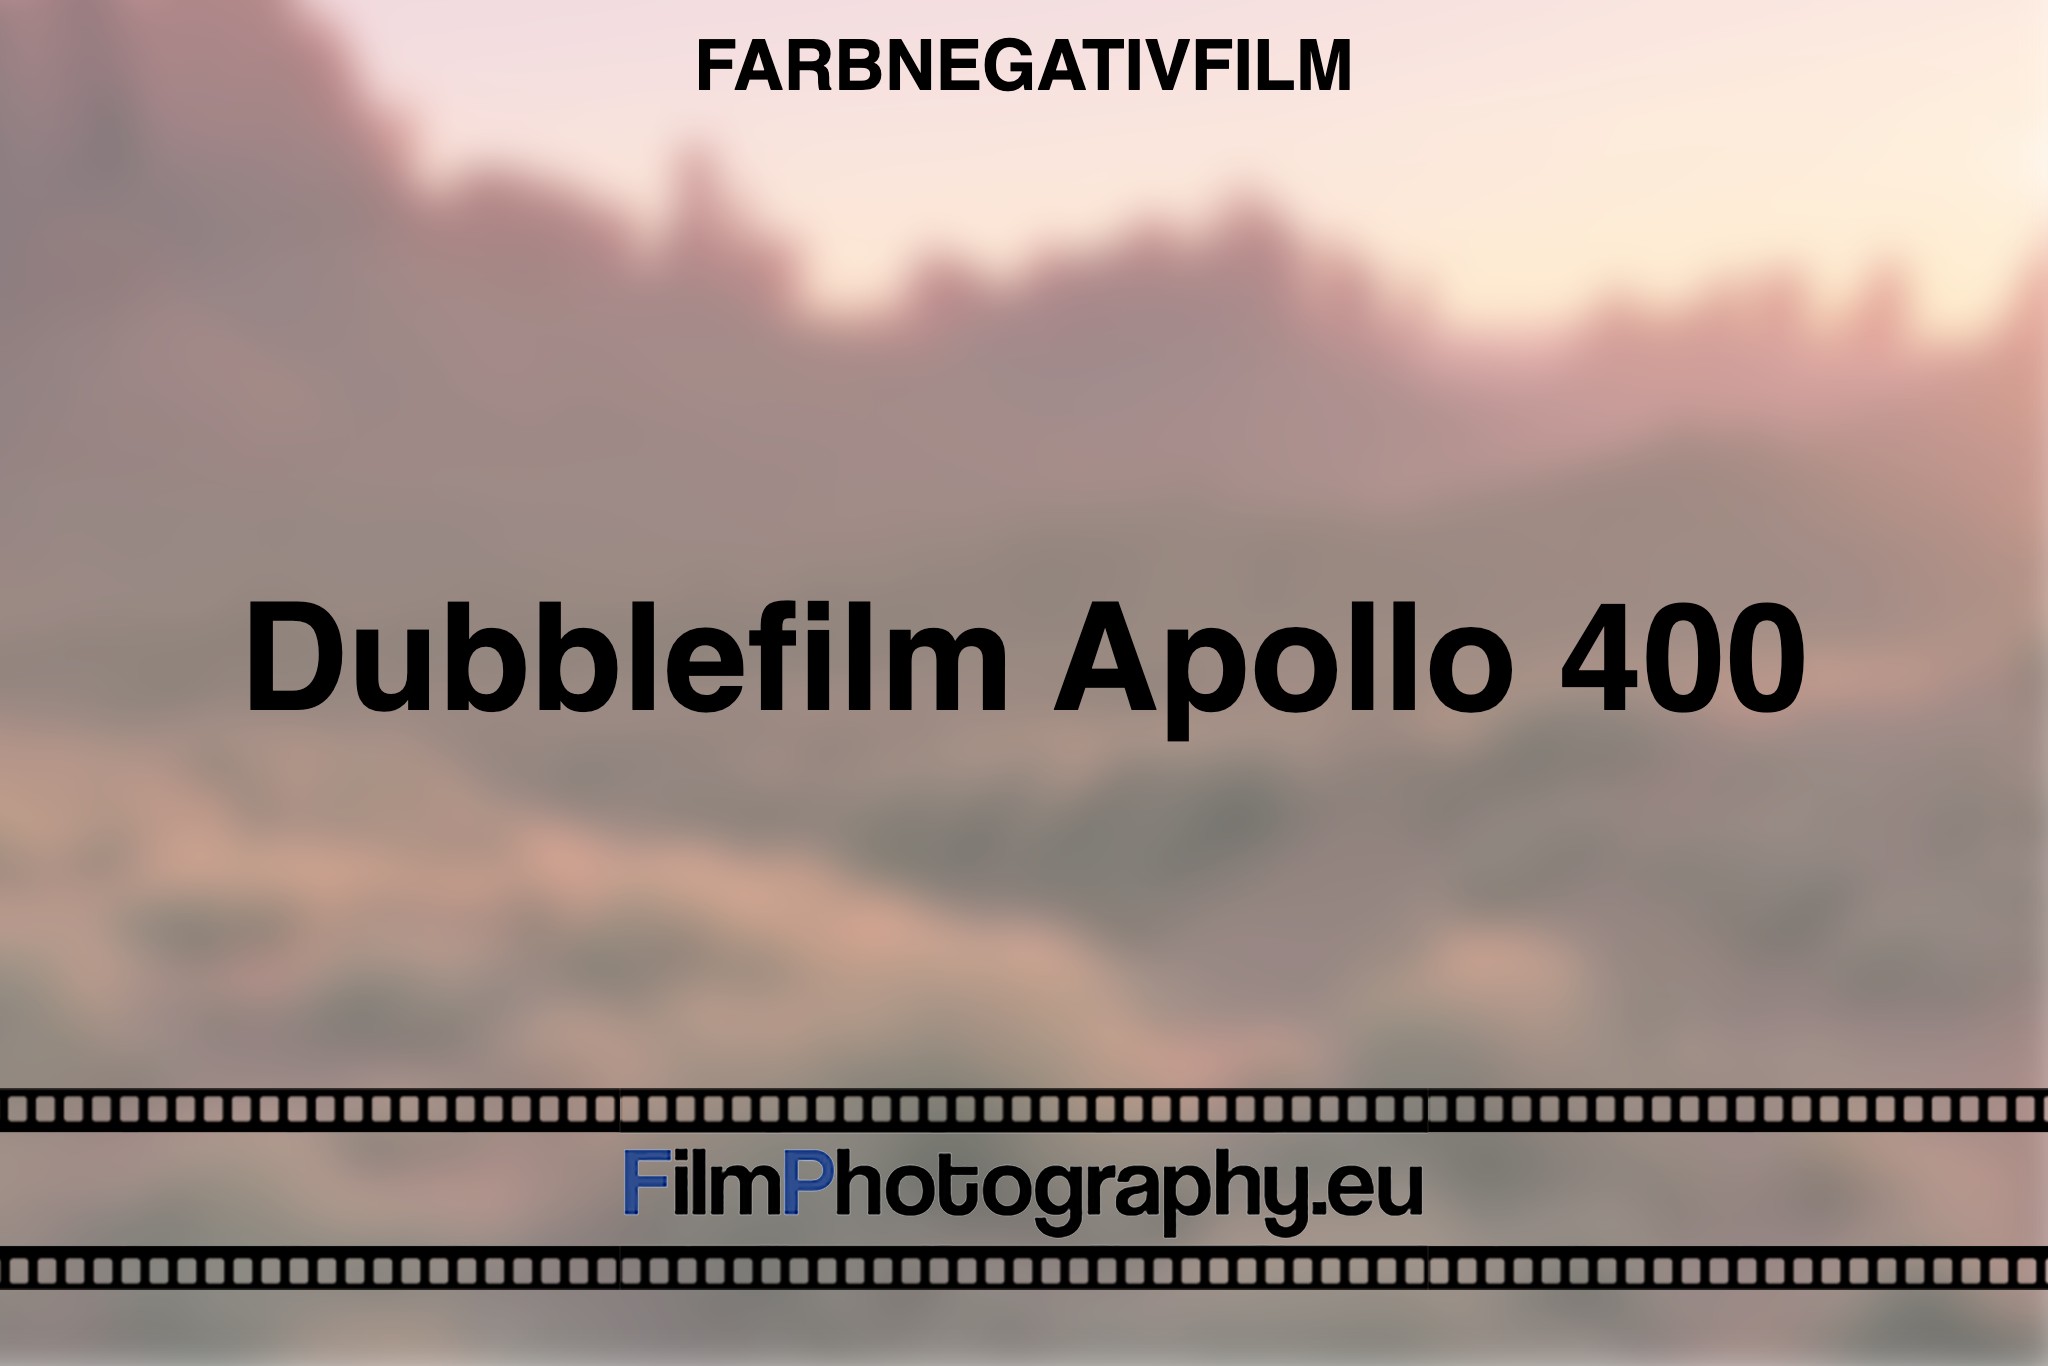 dubblefilm-apollo-400-farbnegativfilm-bnv